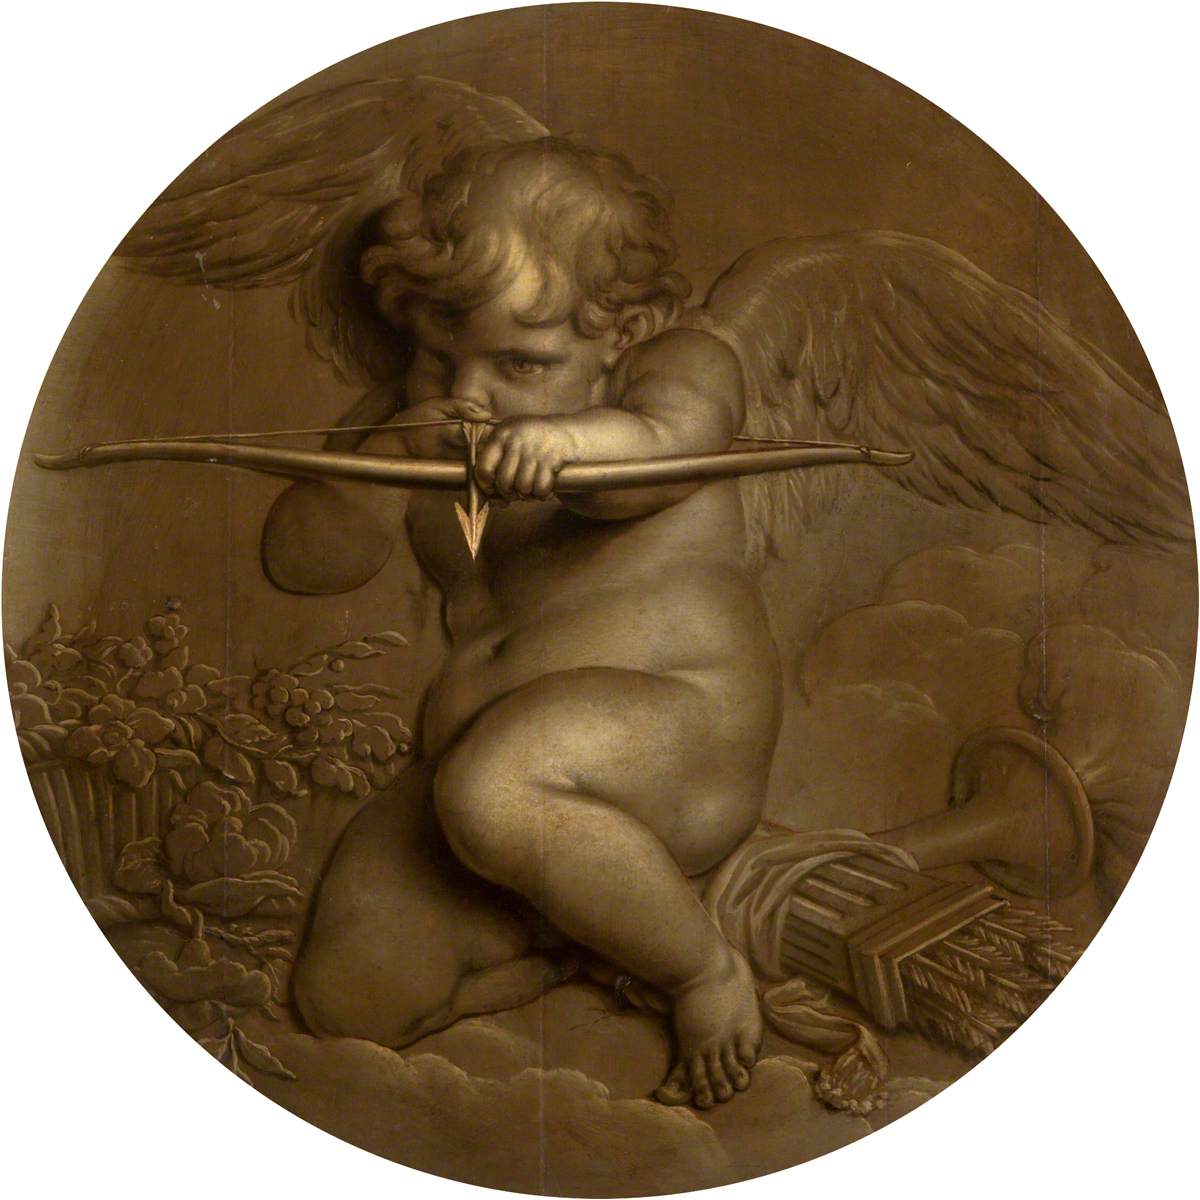 cupid shooting arrow mythology